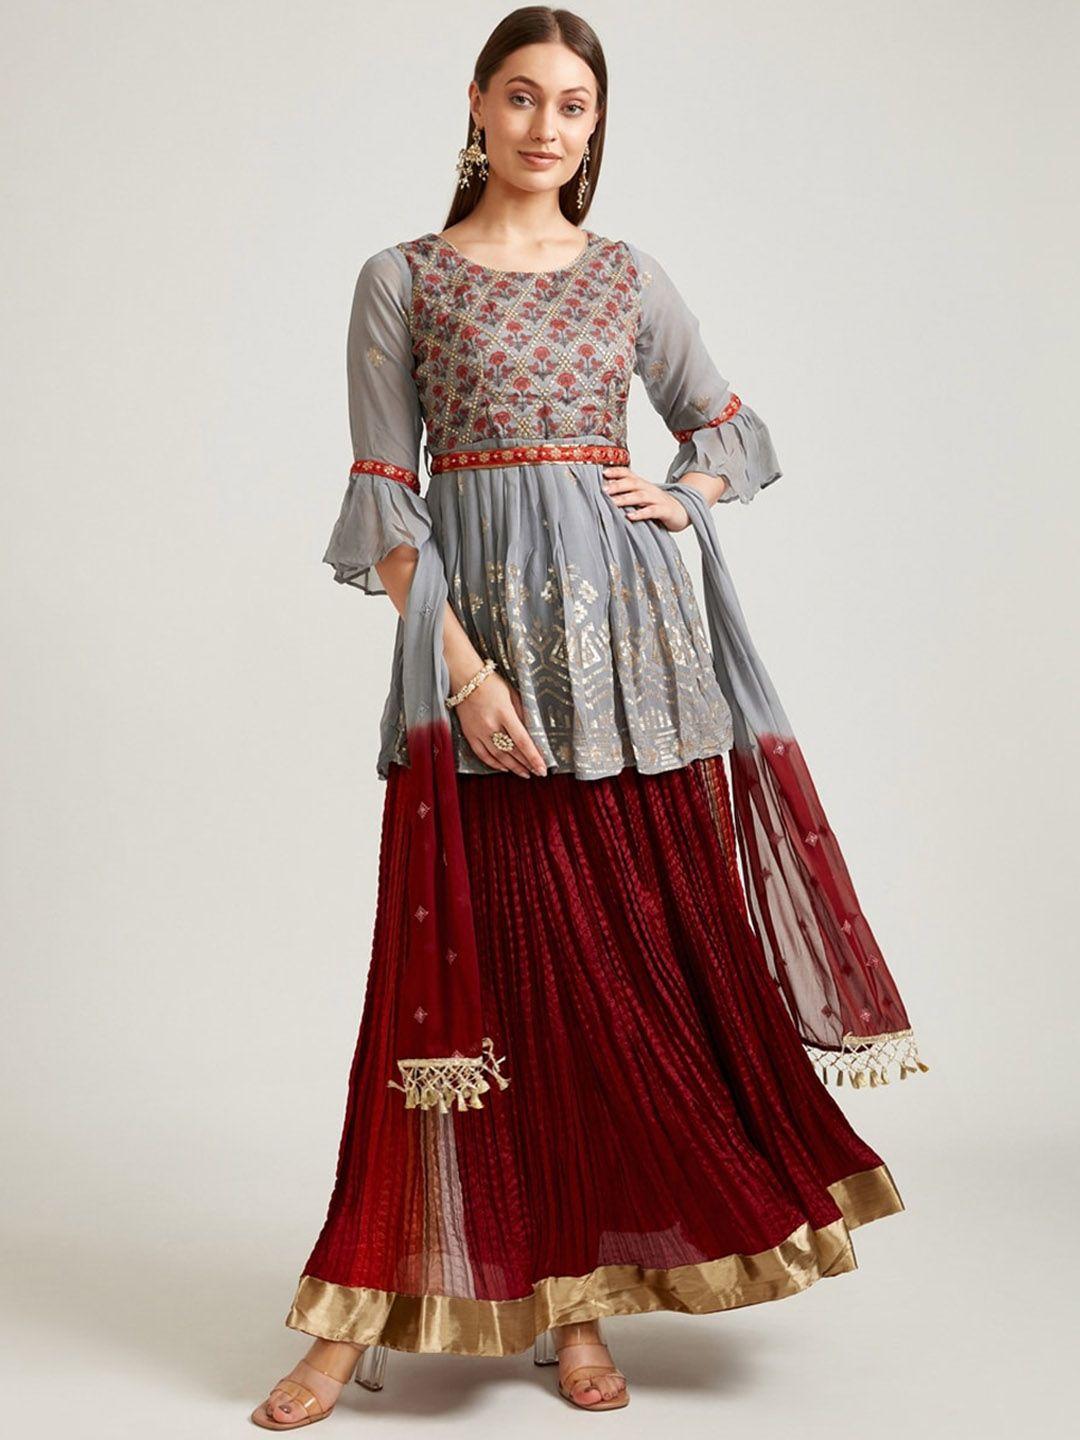 neerus women grey ethnic motifs yoke design pleated sequinned kurti with skirt & with dupatta